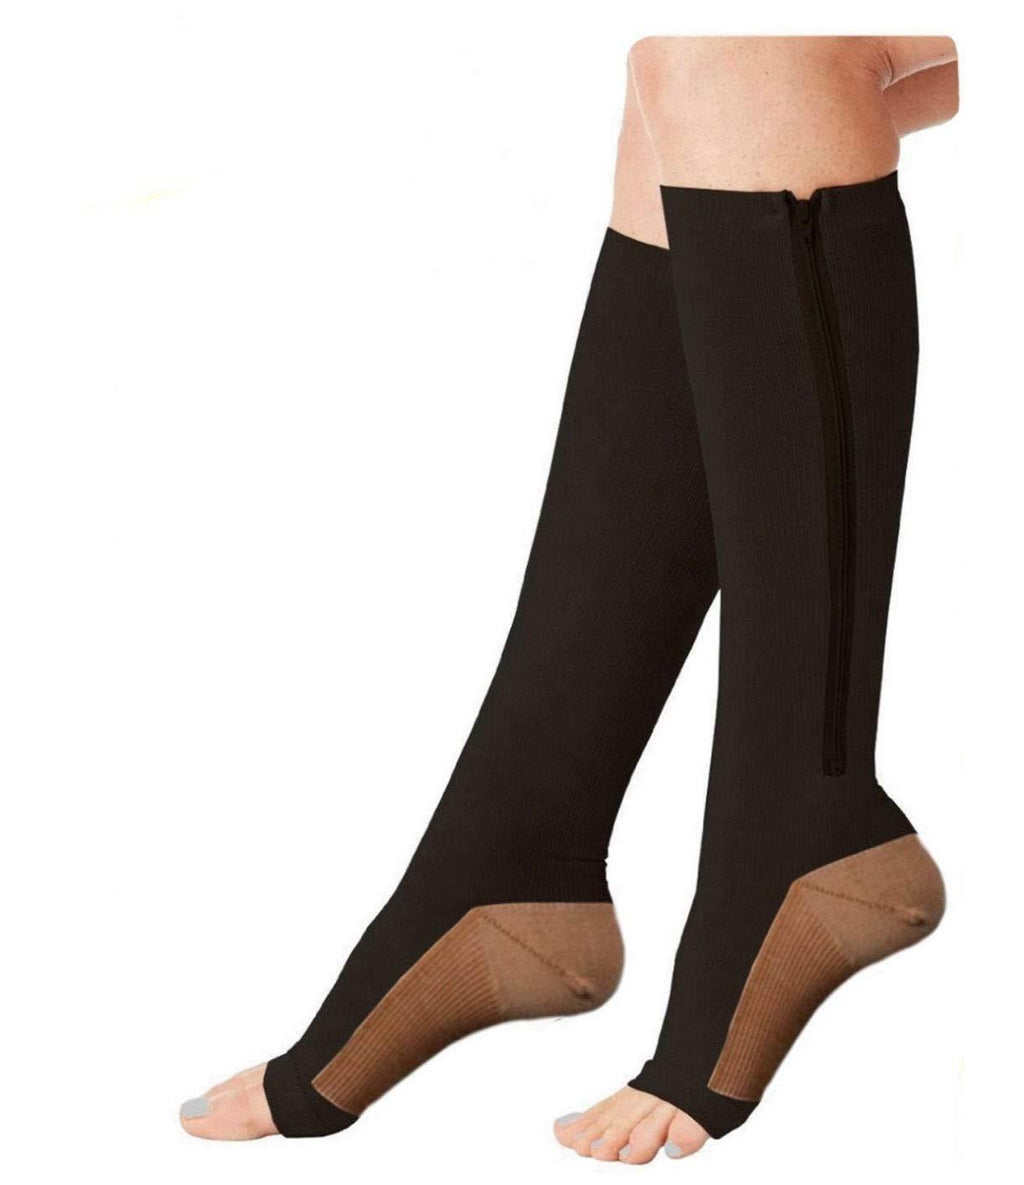 [AUSTRALIA] - BimiSocks Graduated Compression Zipper Socks for Women Comfortable Knee-High Socks for Sports Running Crossfit Nurses and Recovery. (ZipSocks Black/Copper - 1 Pair, Sm/Med) 